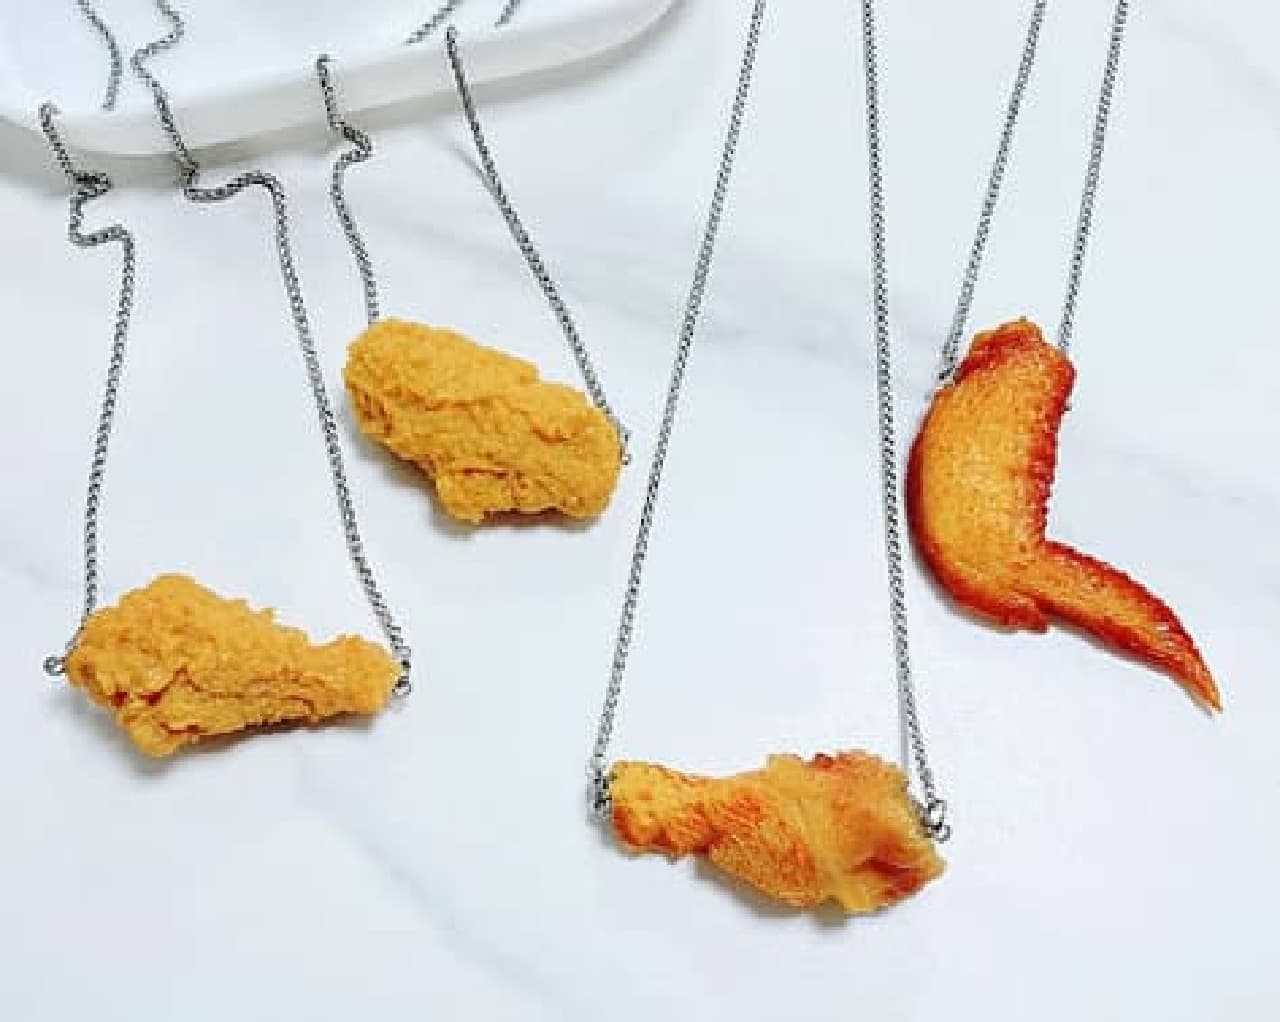 Handmade store deco chan! "Fried chicken pendant